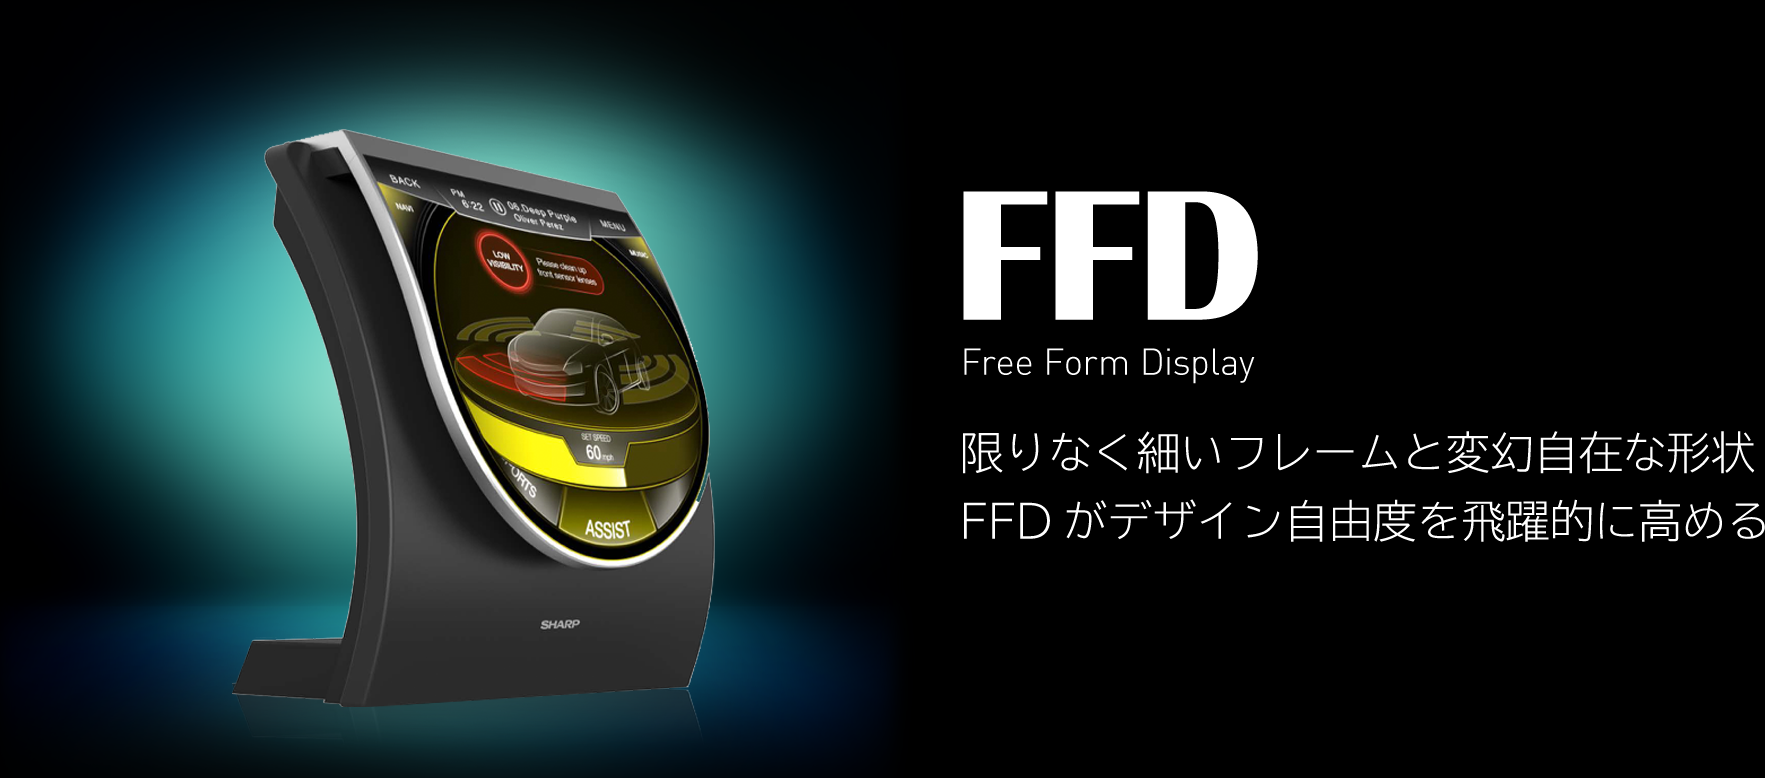 FFD - Free Form Display